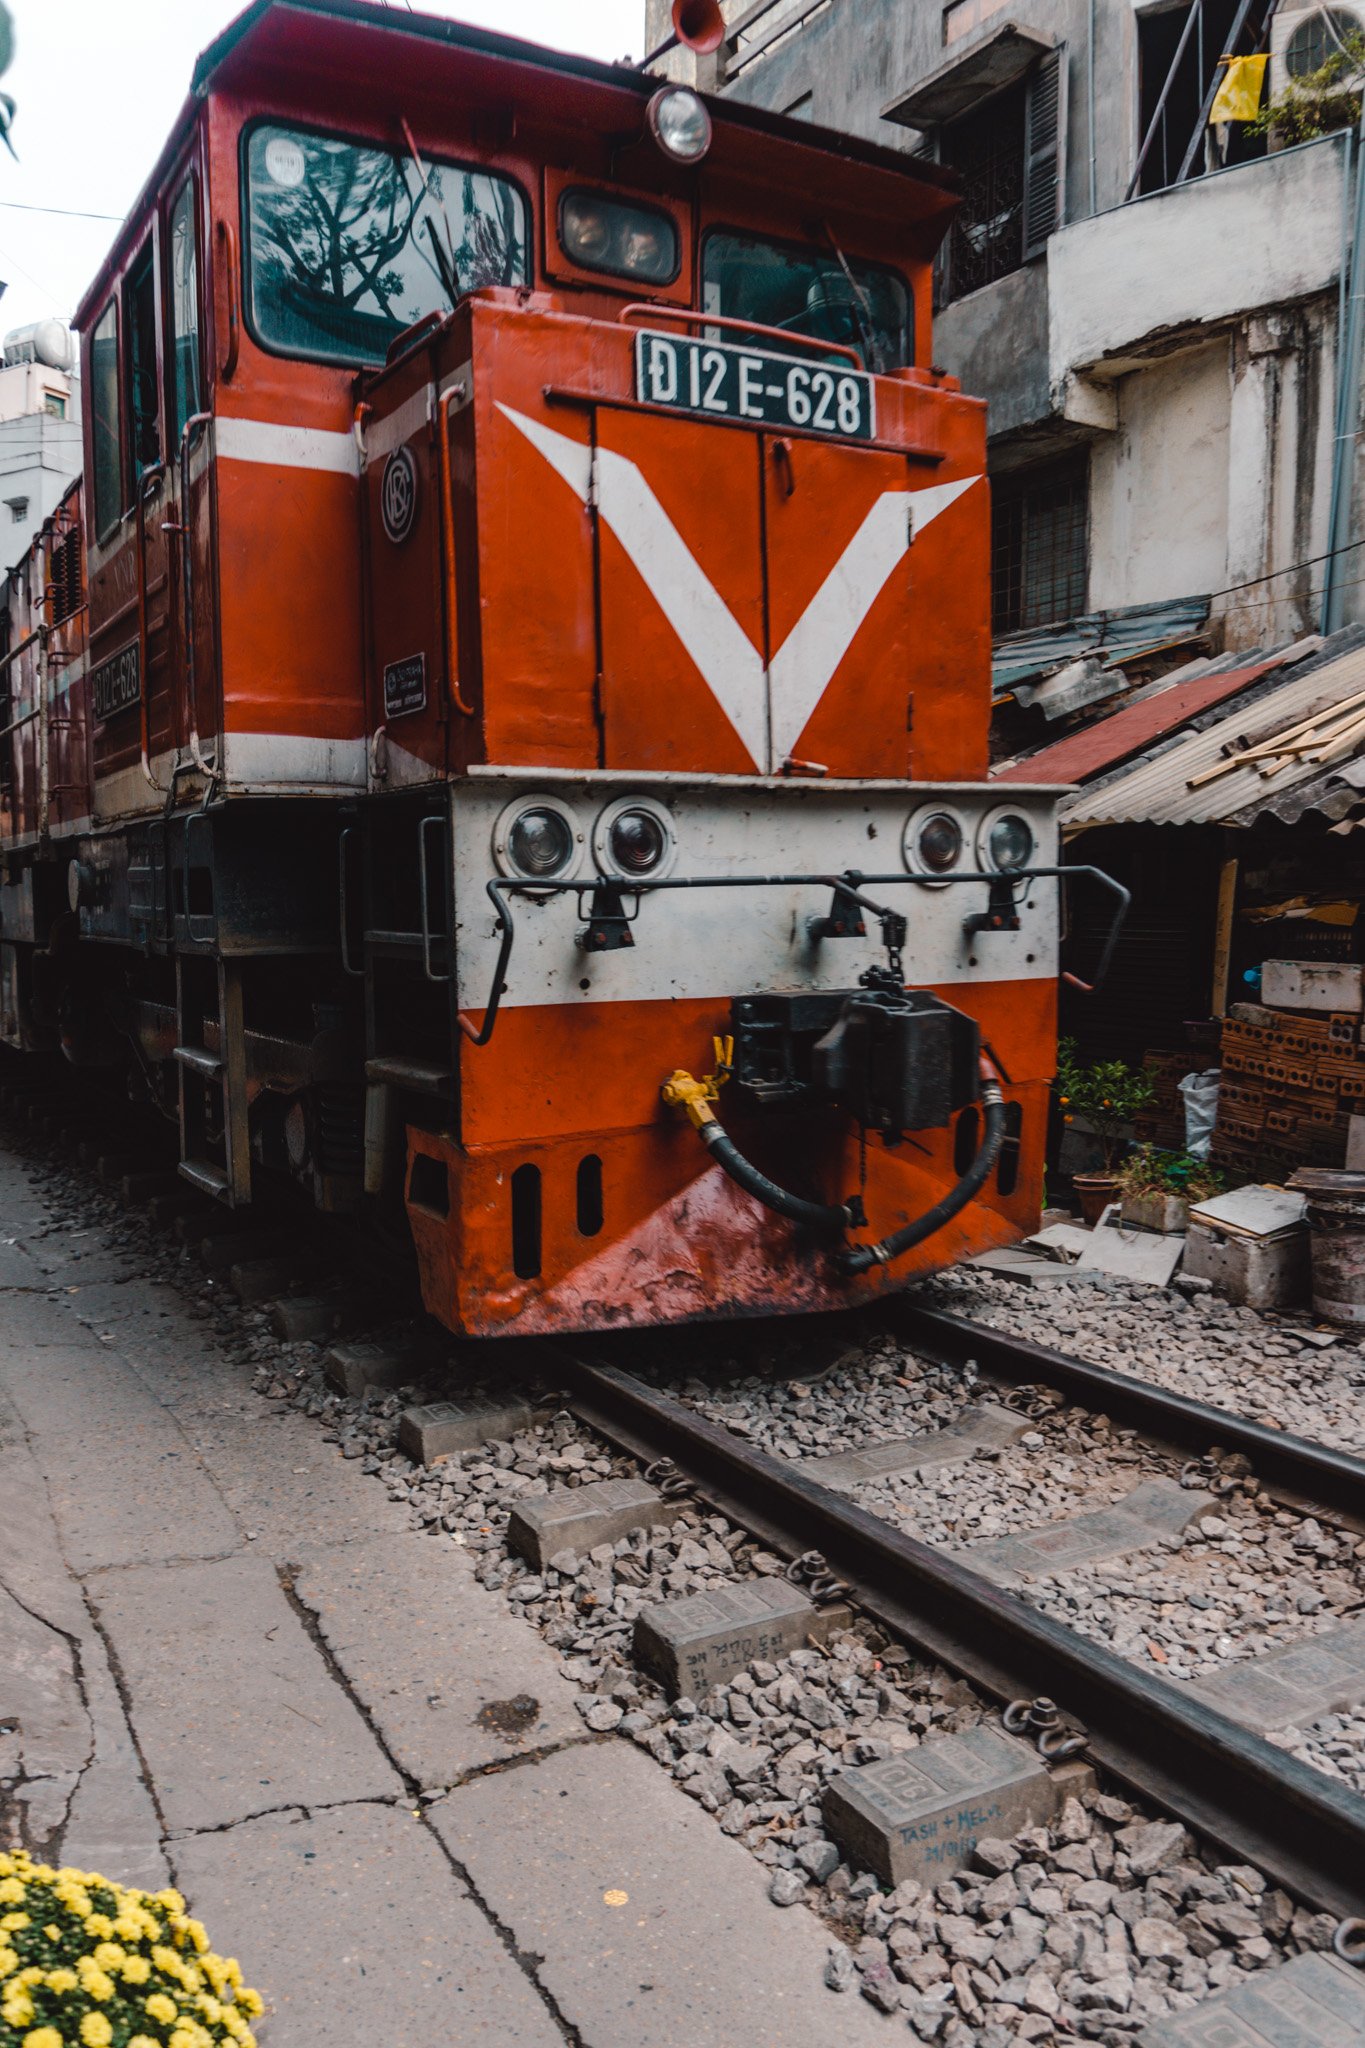 a train passing along Train Street, Hanoi, Vietnam